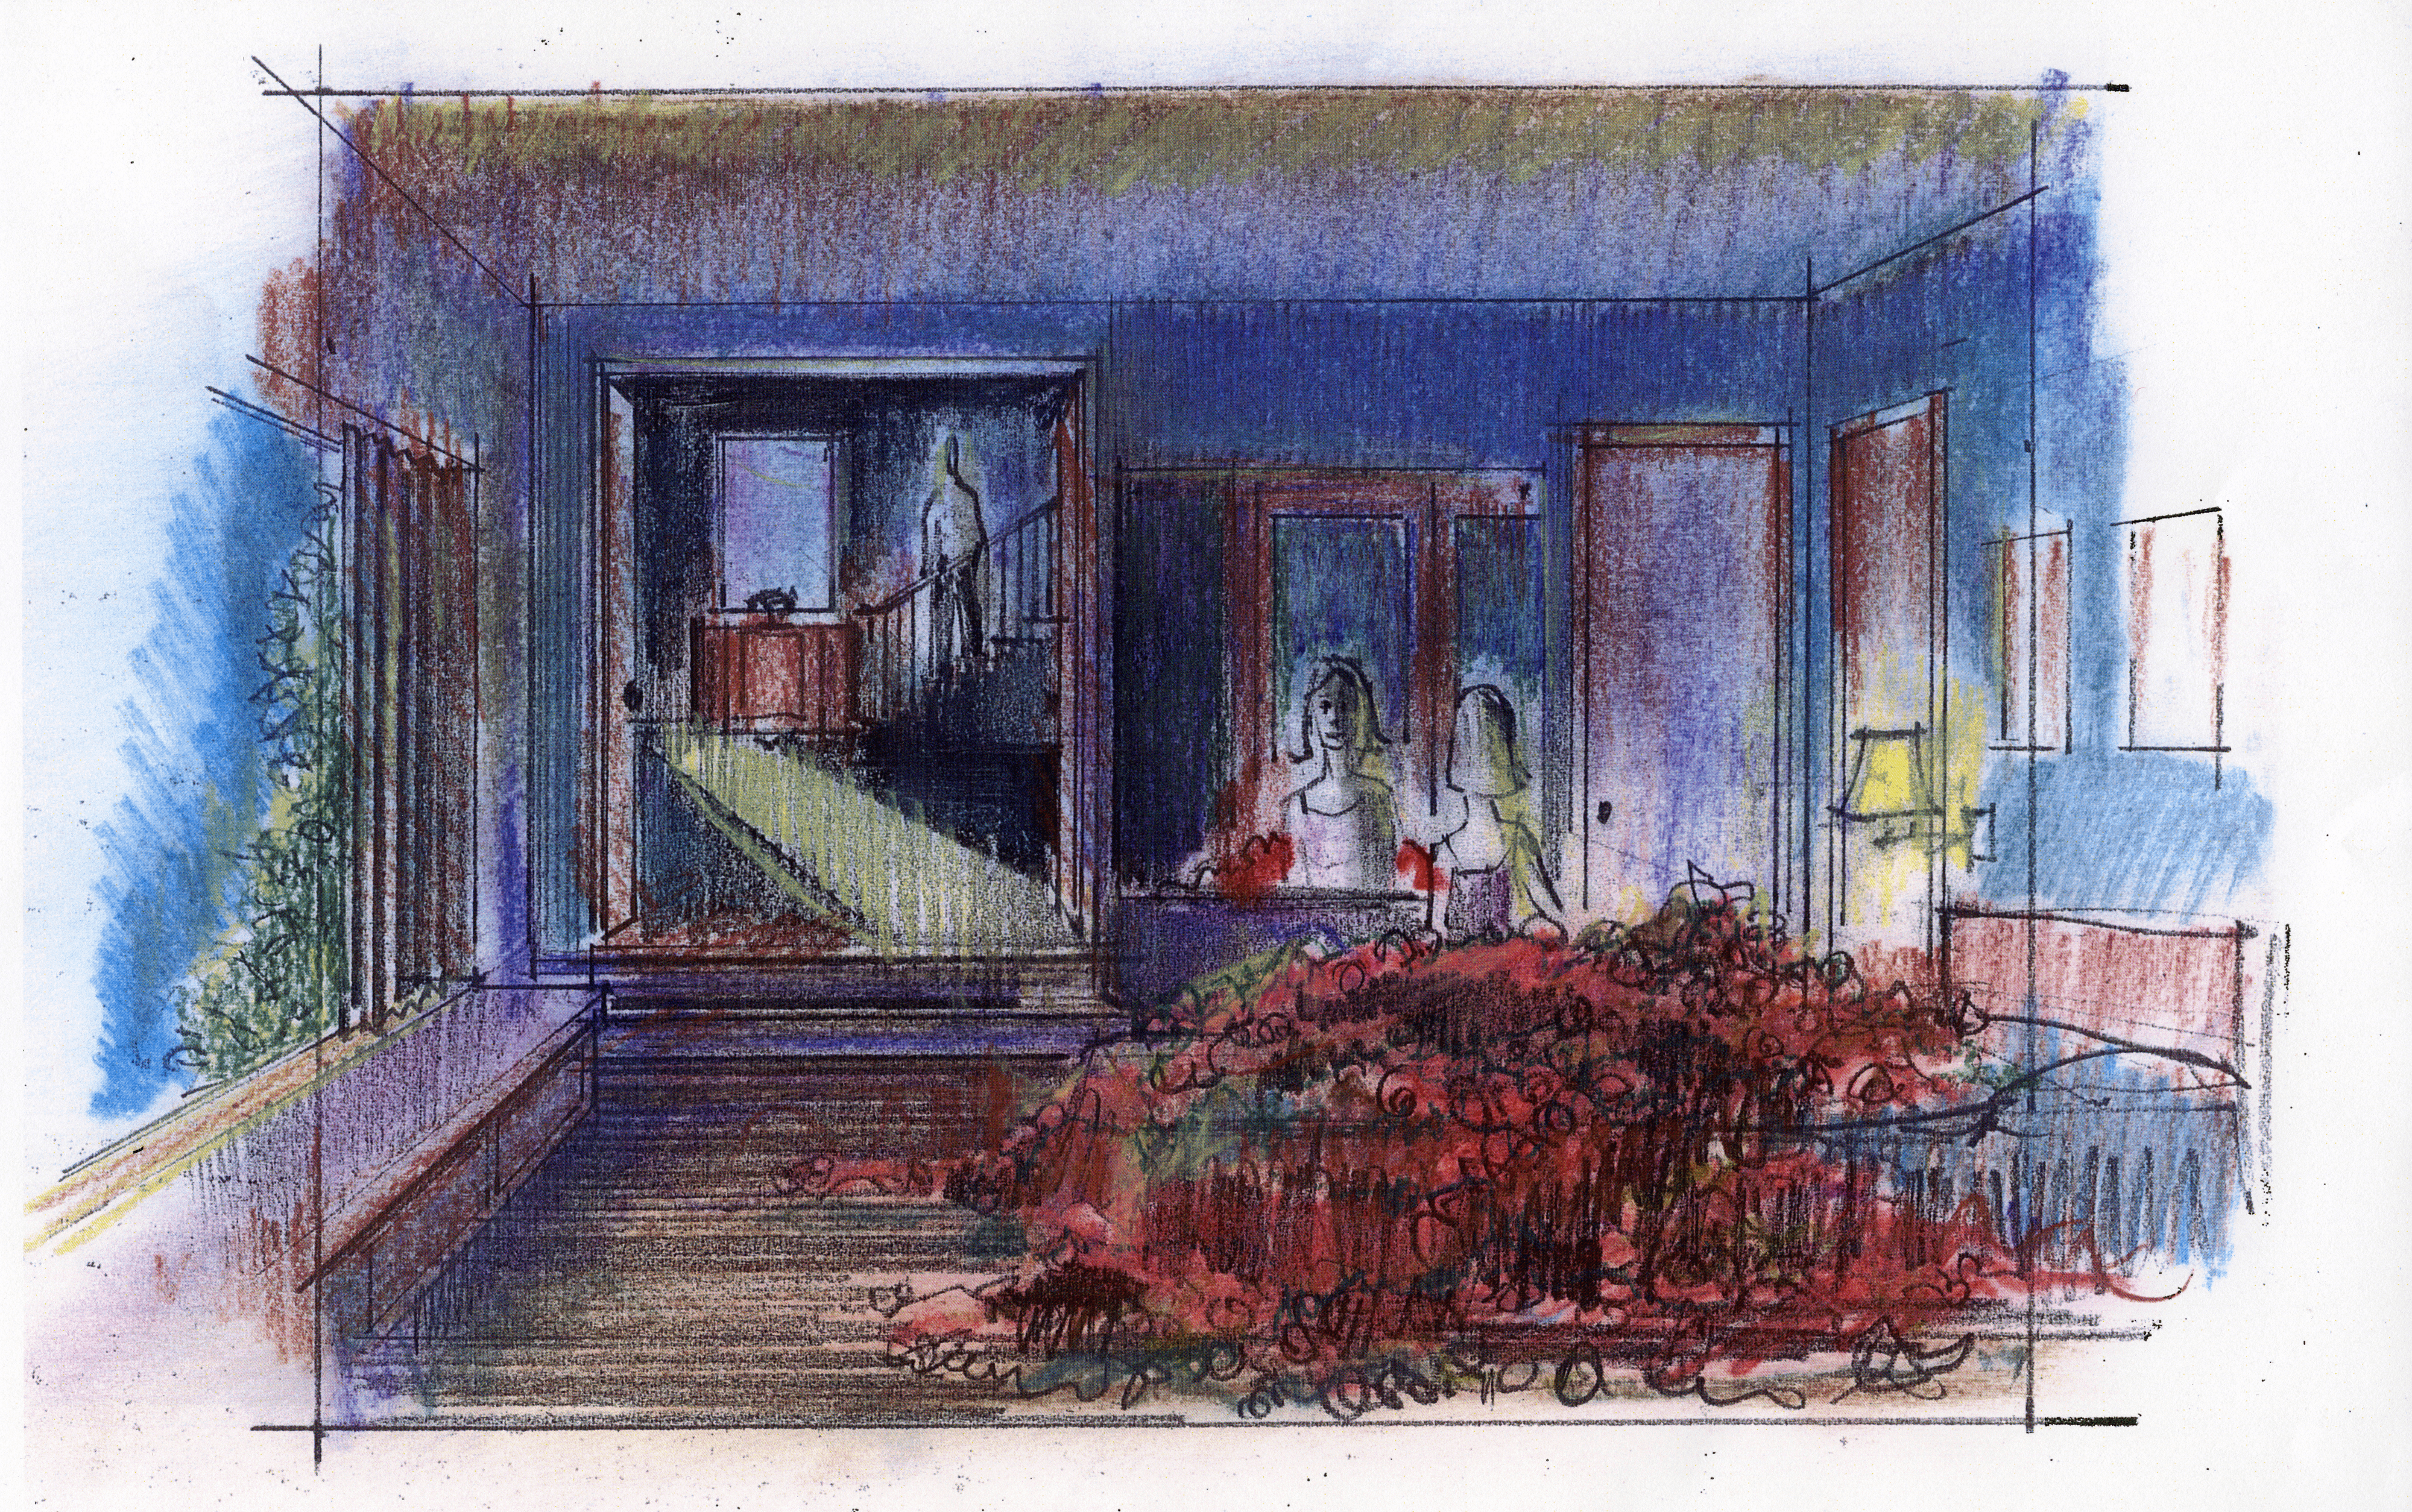 Beneath the Roses, 2003-2008 [Bed of Roses Bundle] Set Design Color Sketch by Carl Sprague [No. 2]